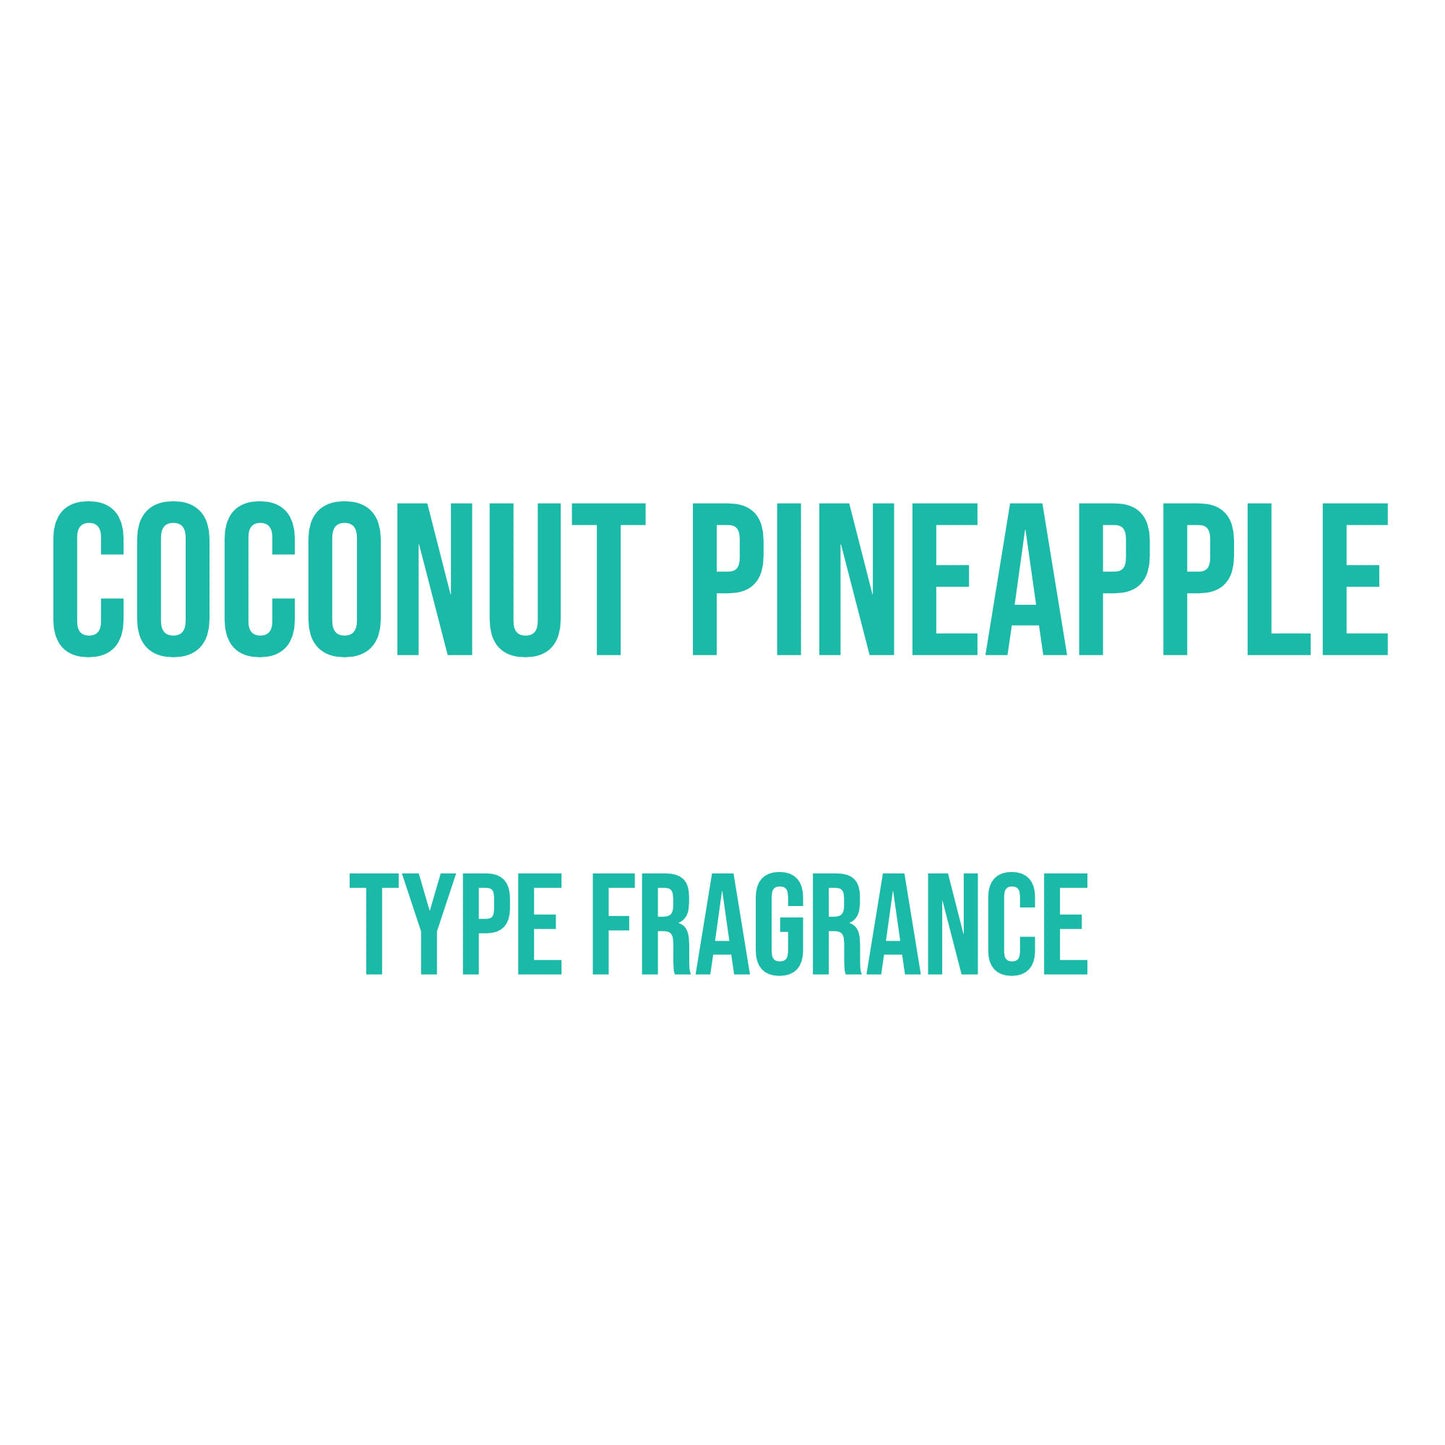 Coconut Pineapple Type Fragrance